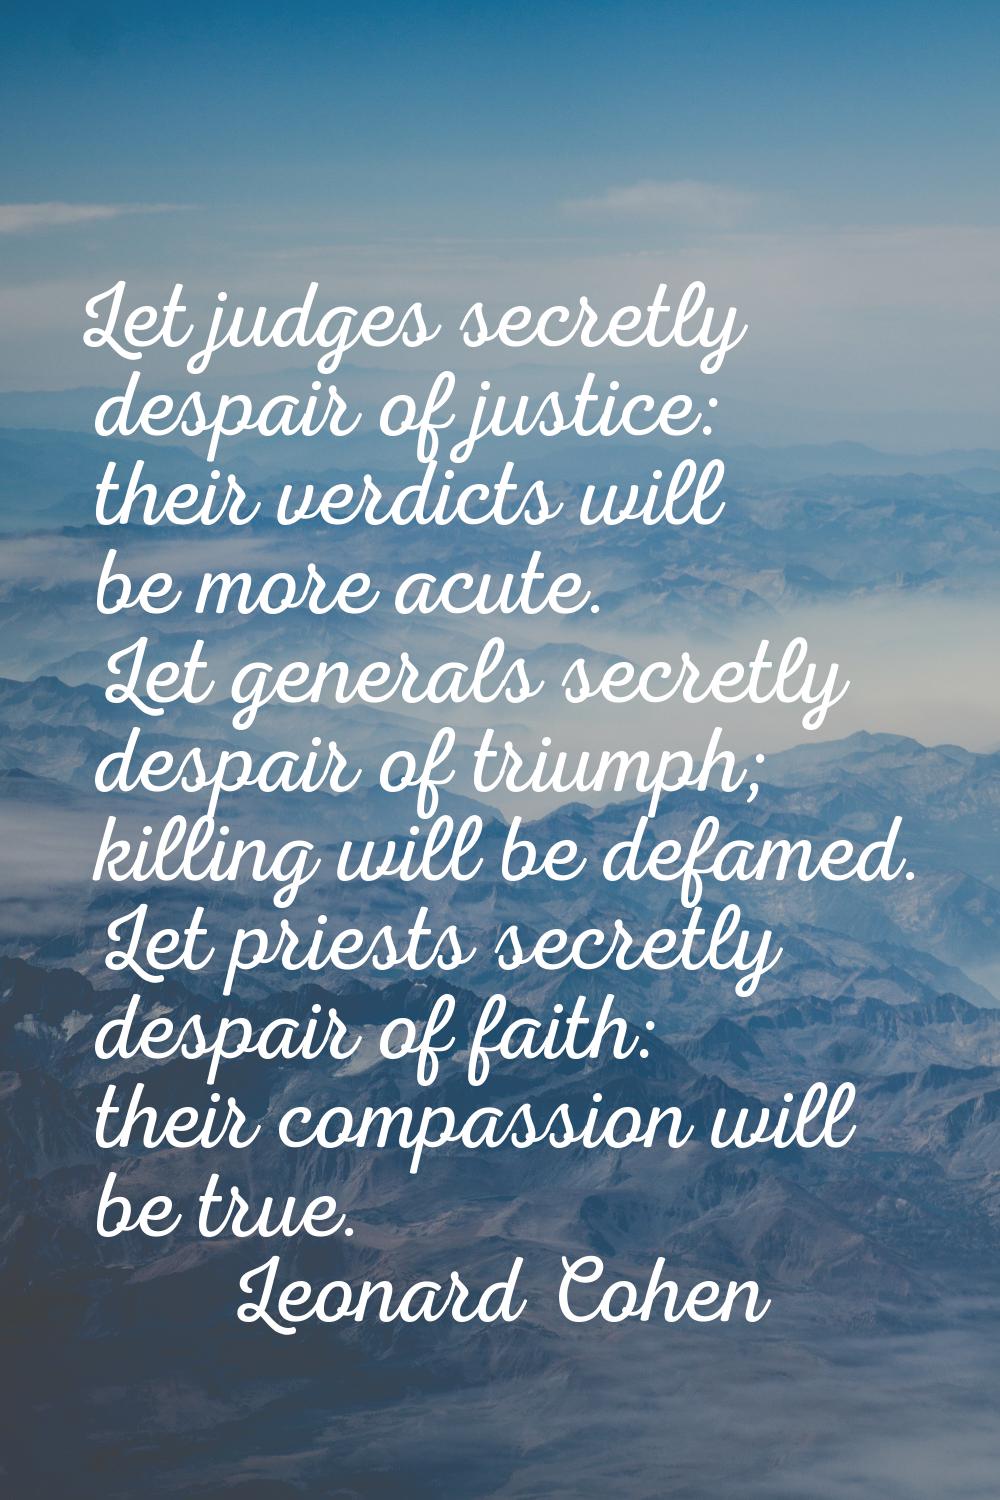 Let judges secretly despair of justice: their verdicts will be more acute. Let generals secretly de